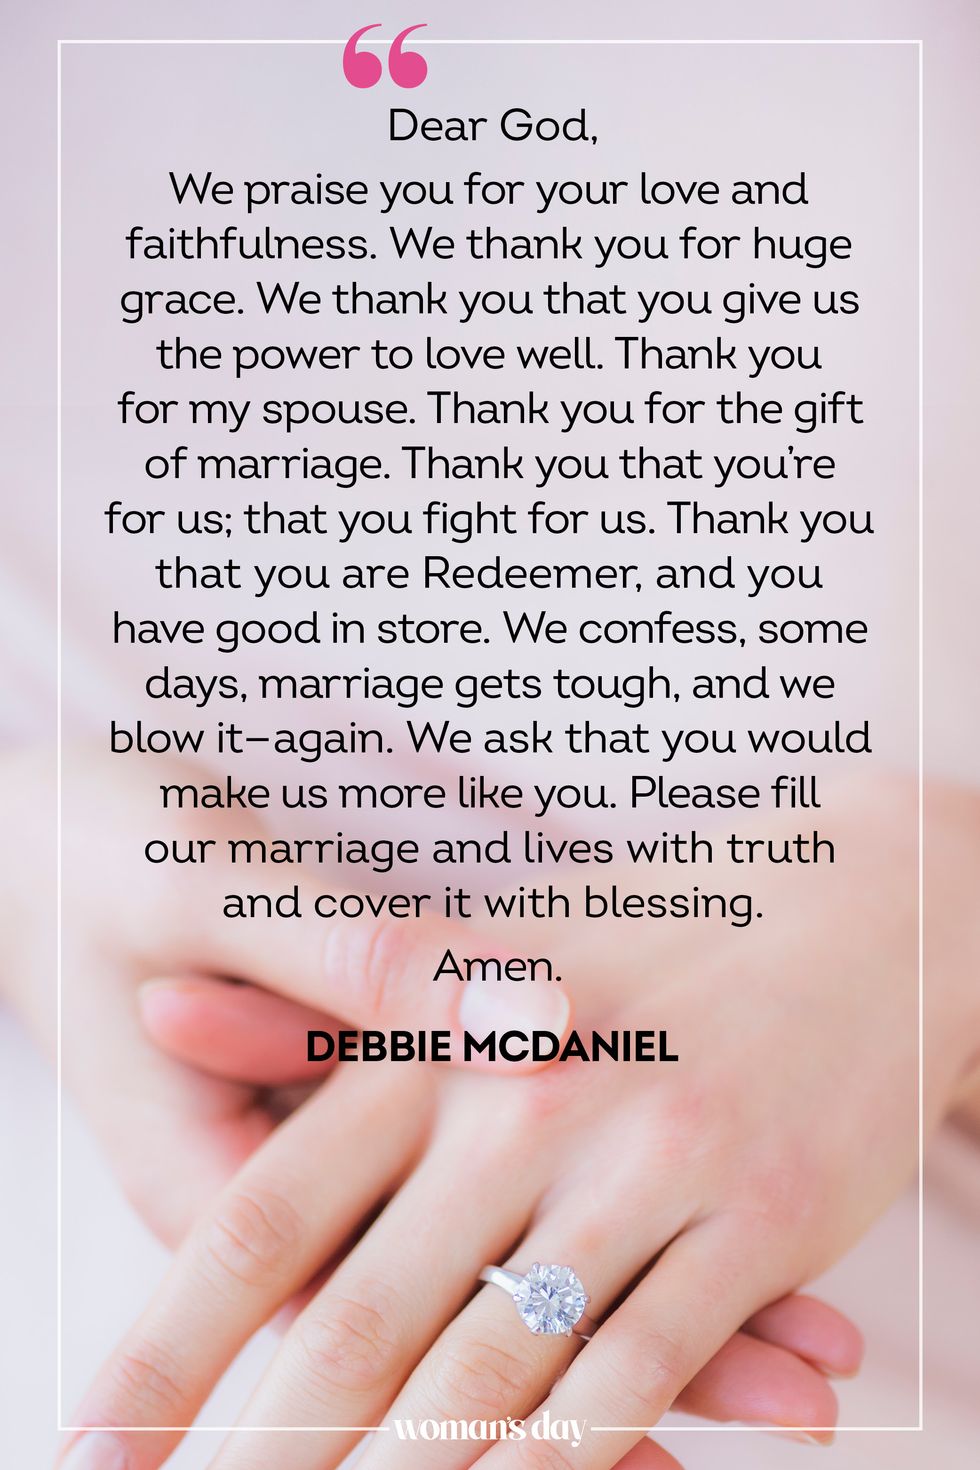 prayer for marriage debbie mcdaniel